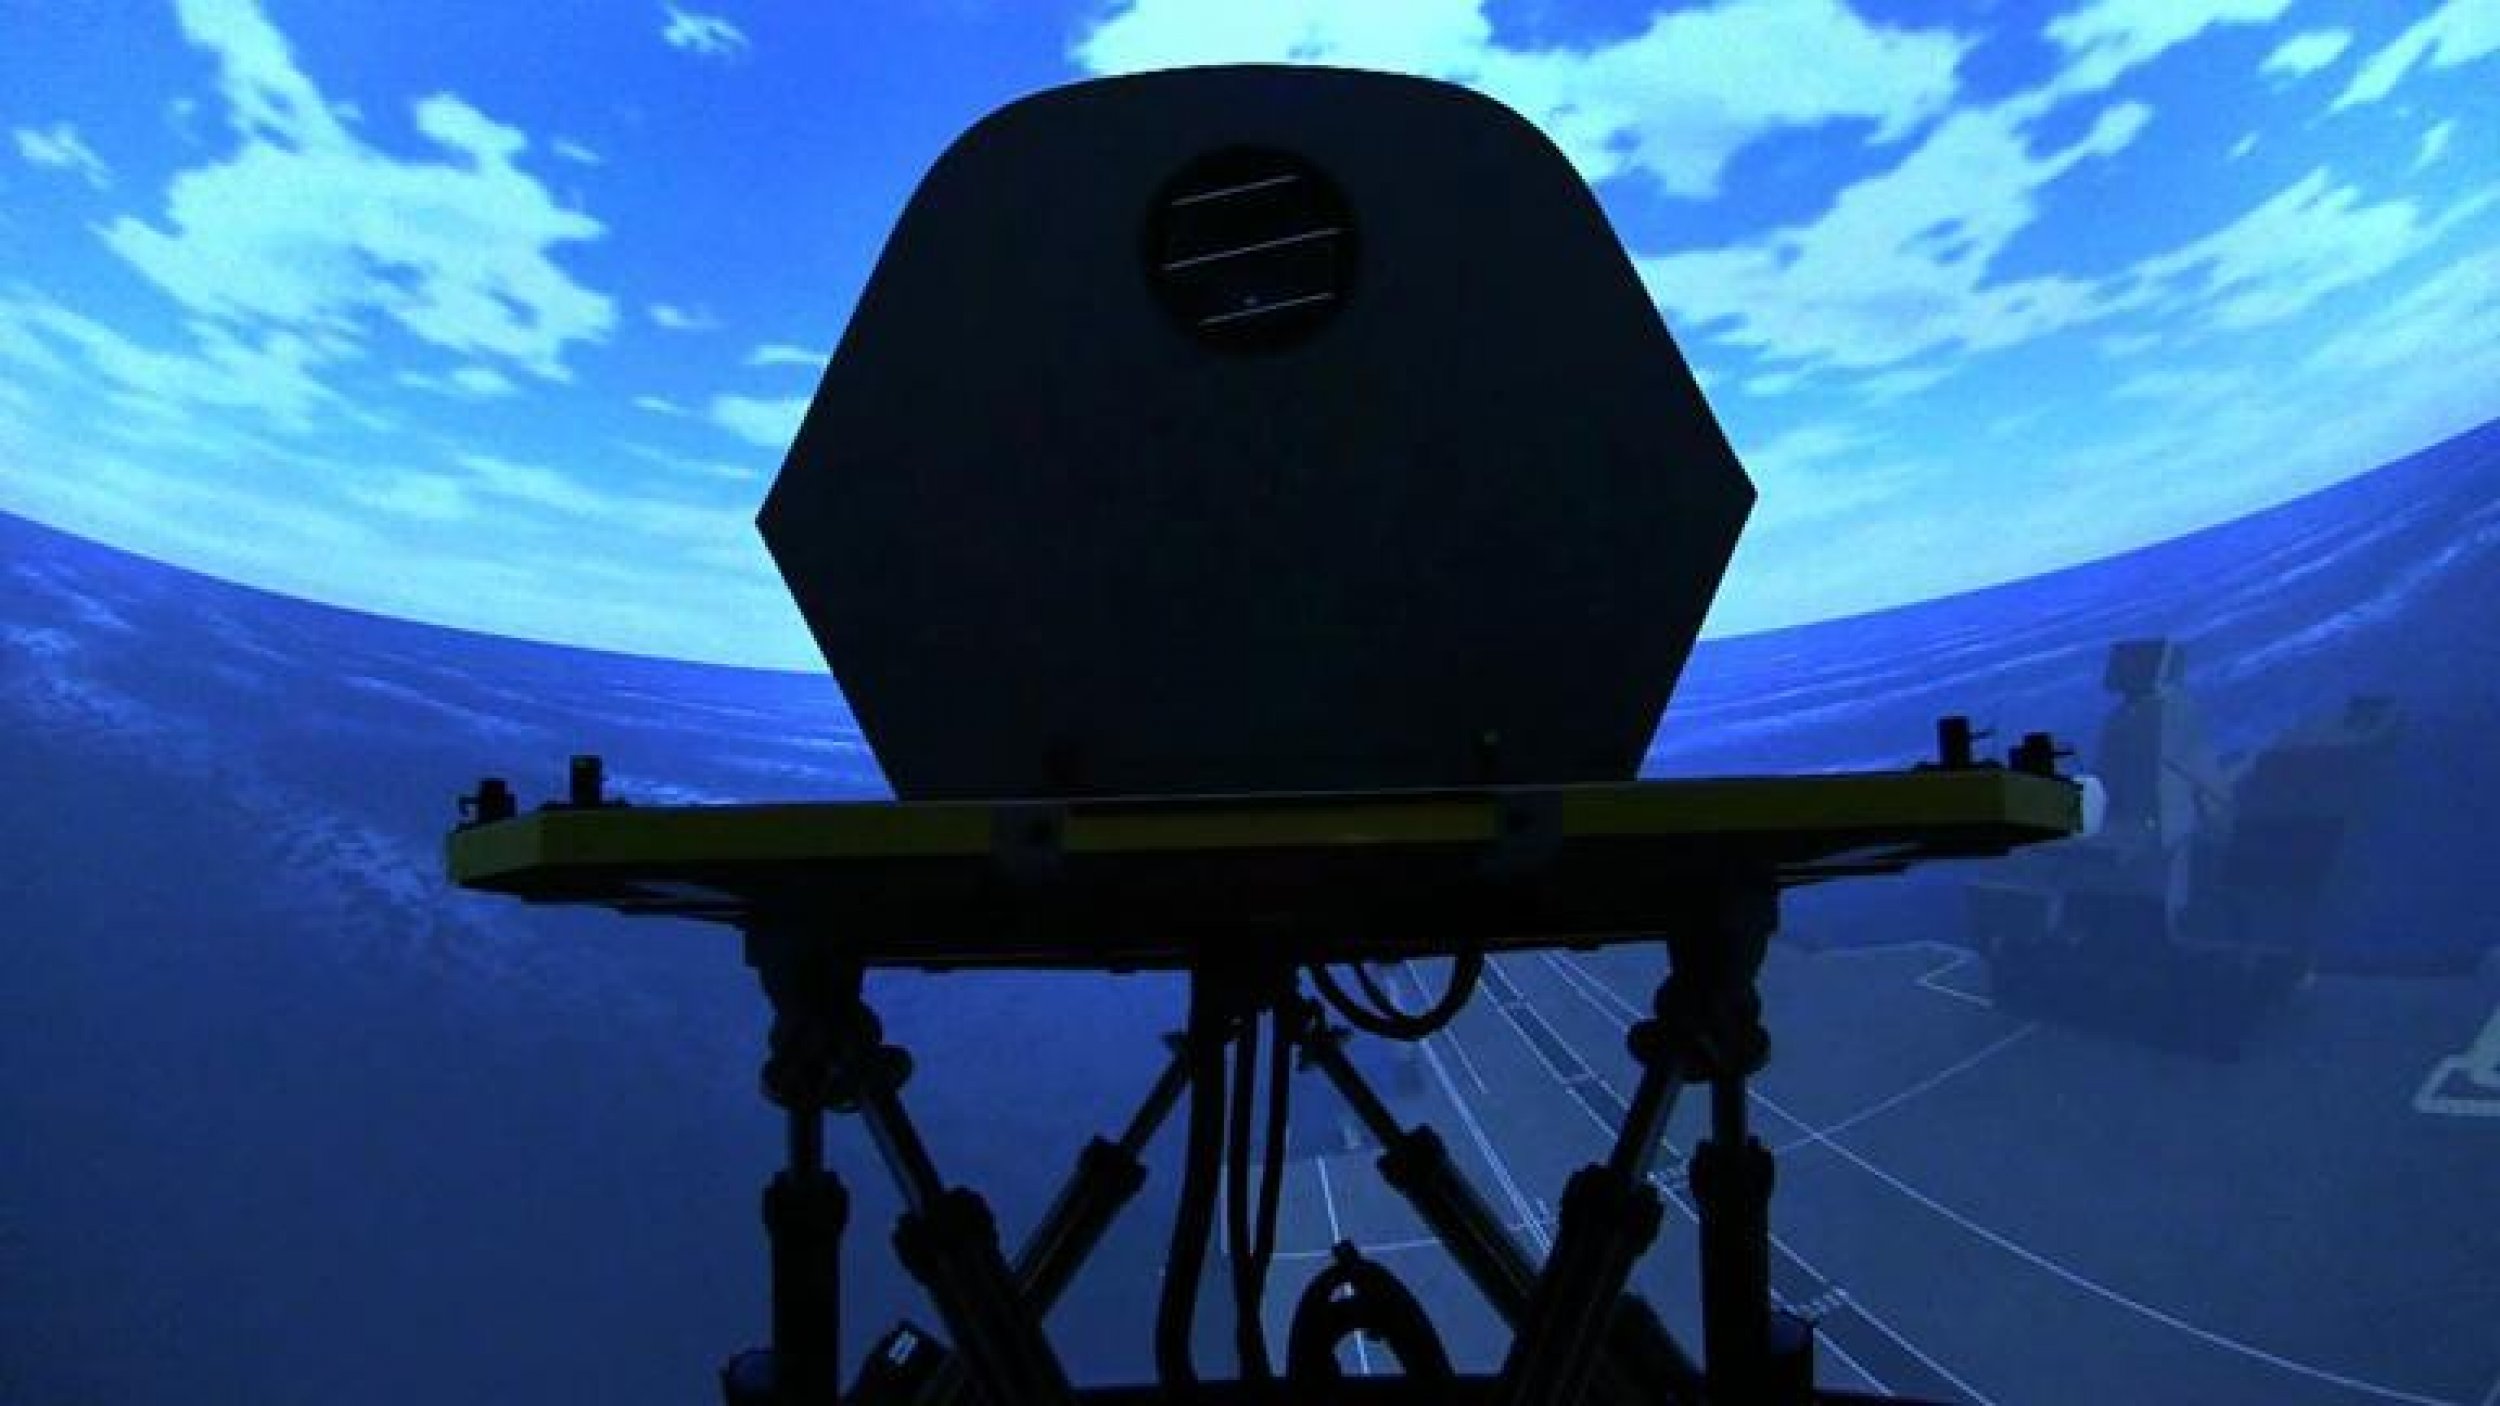 BAE systems build 2m bespoke simulator for F-35 Lightning II fighter jet